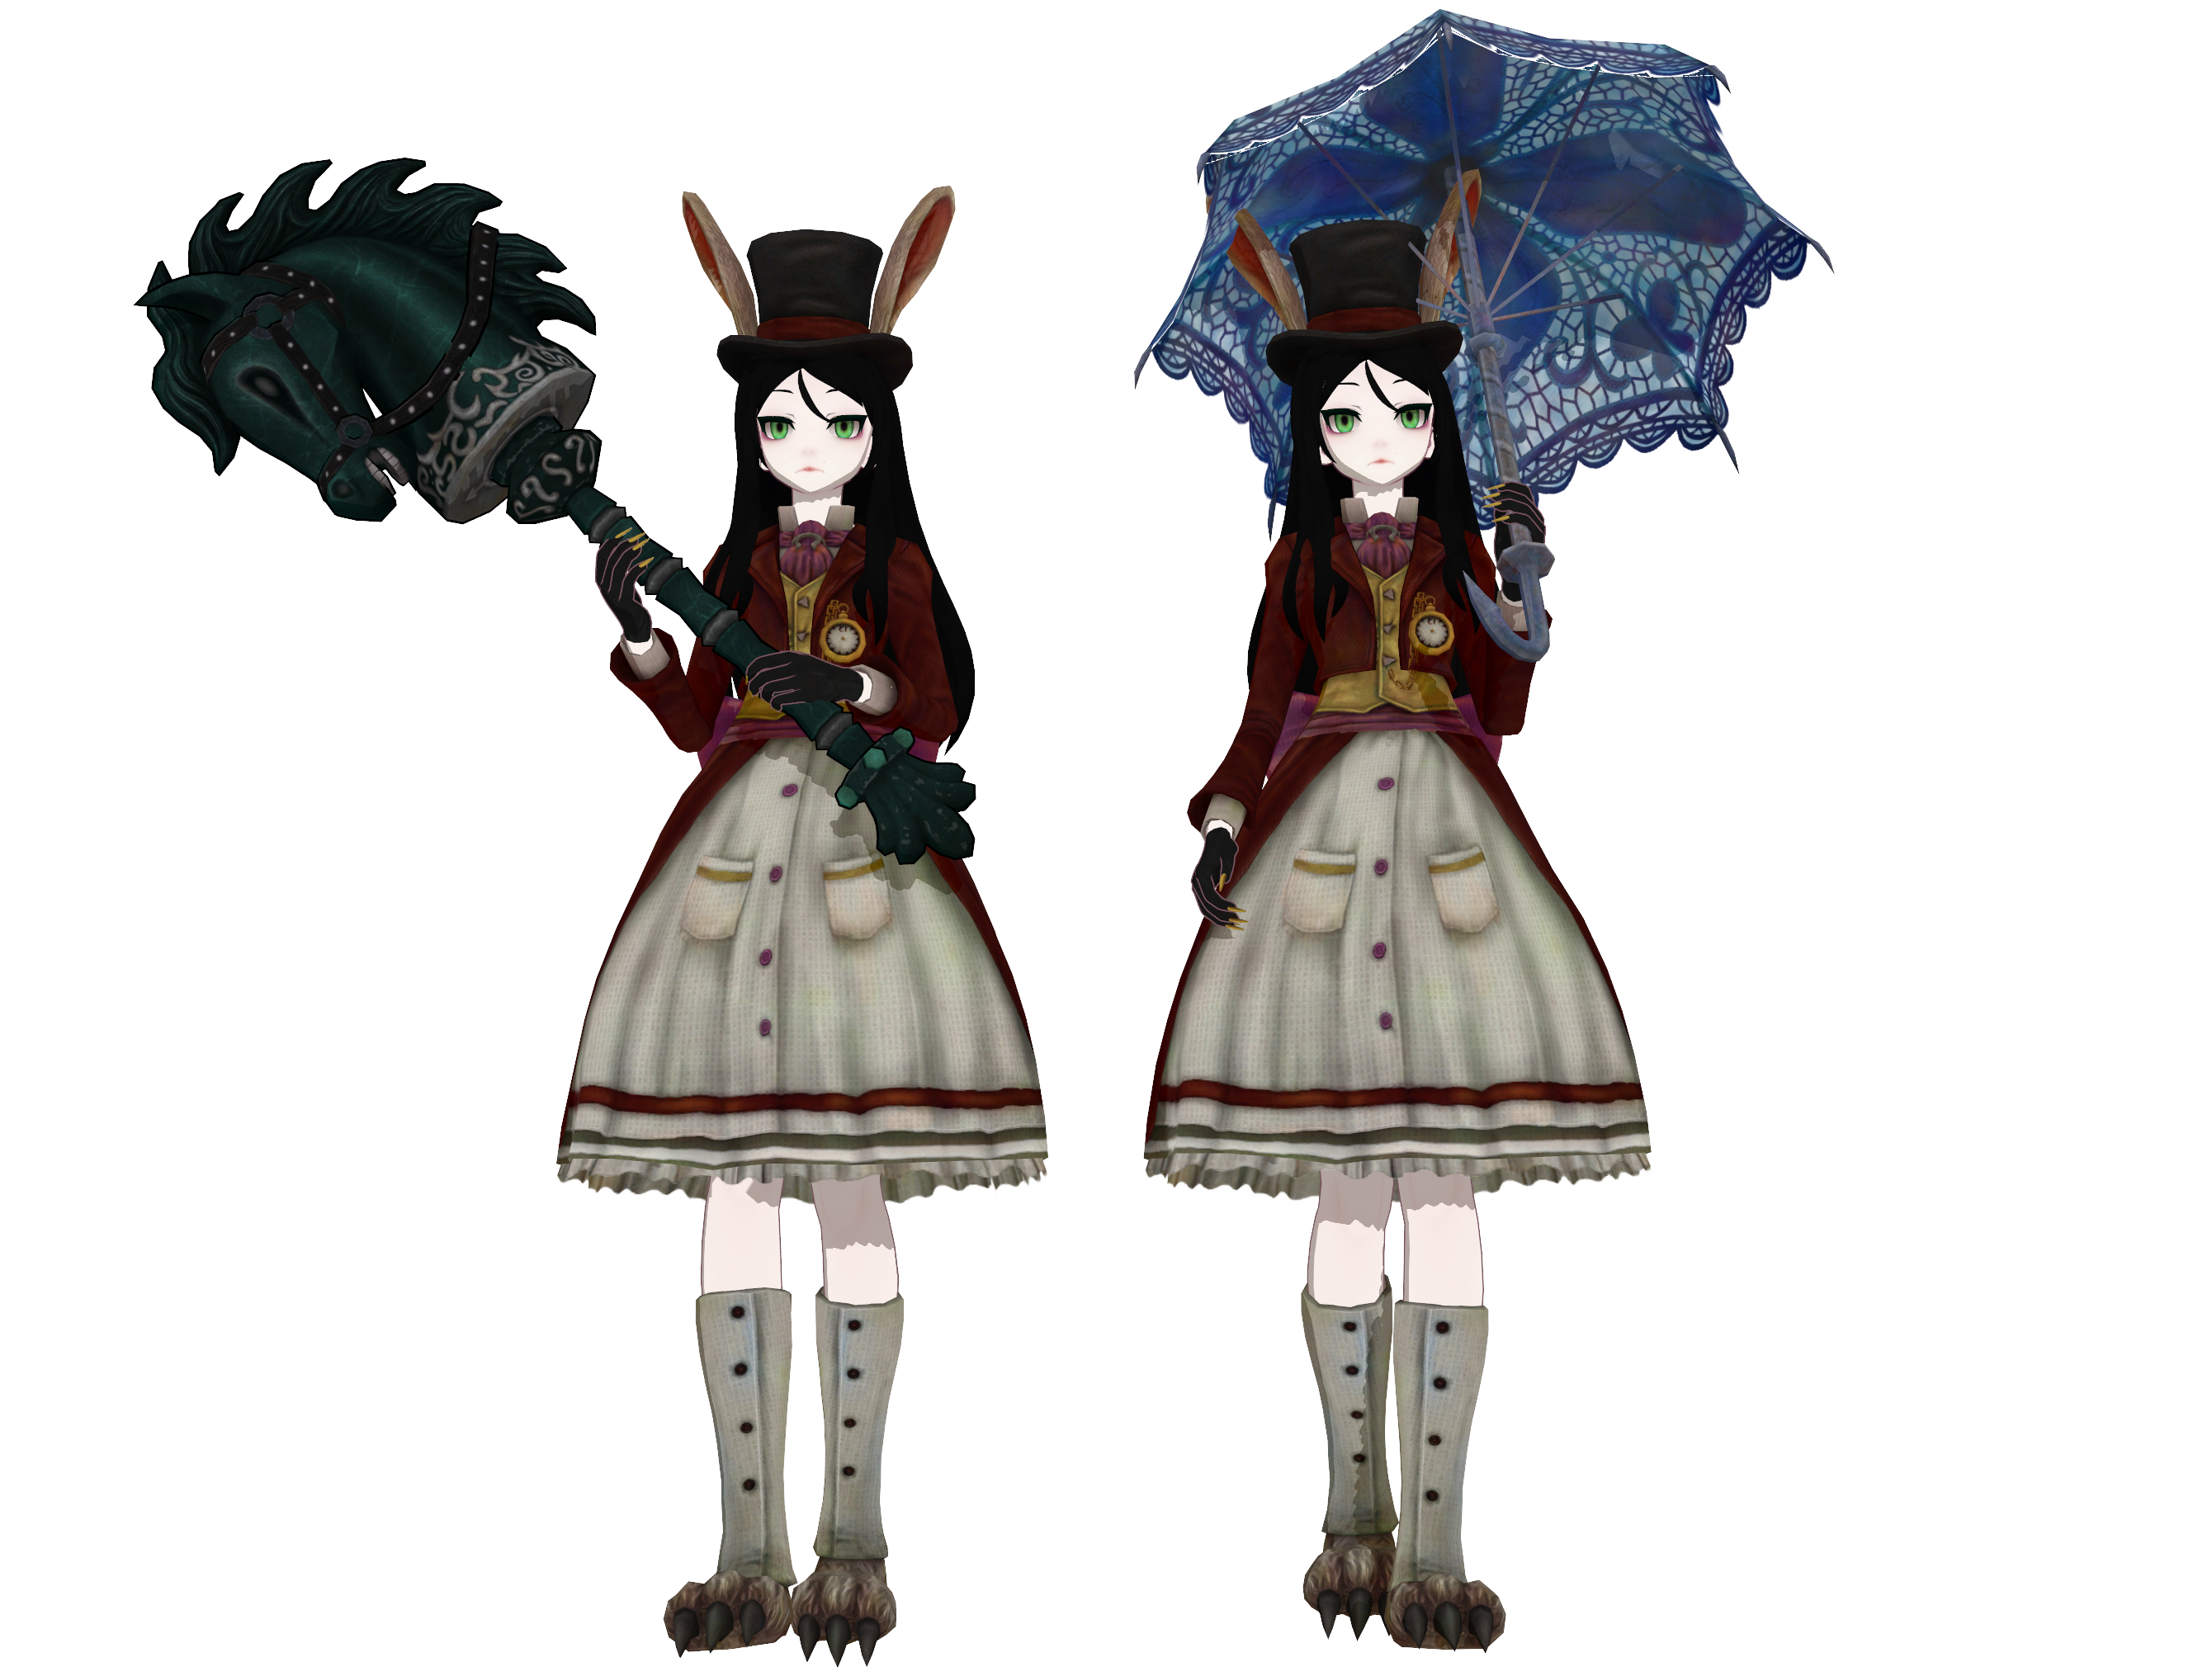 3 the parasol.  Alice madness returns, Alice liddell, Alice madness